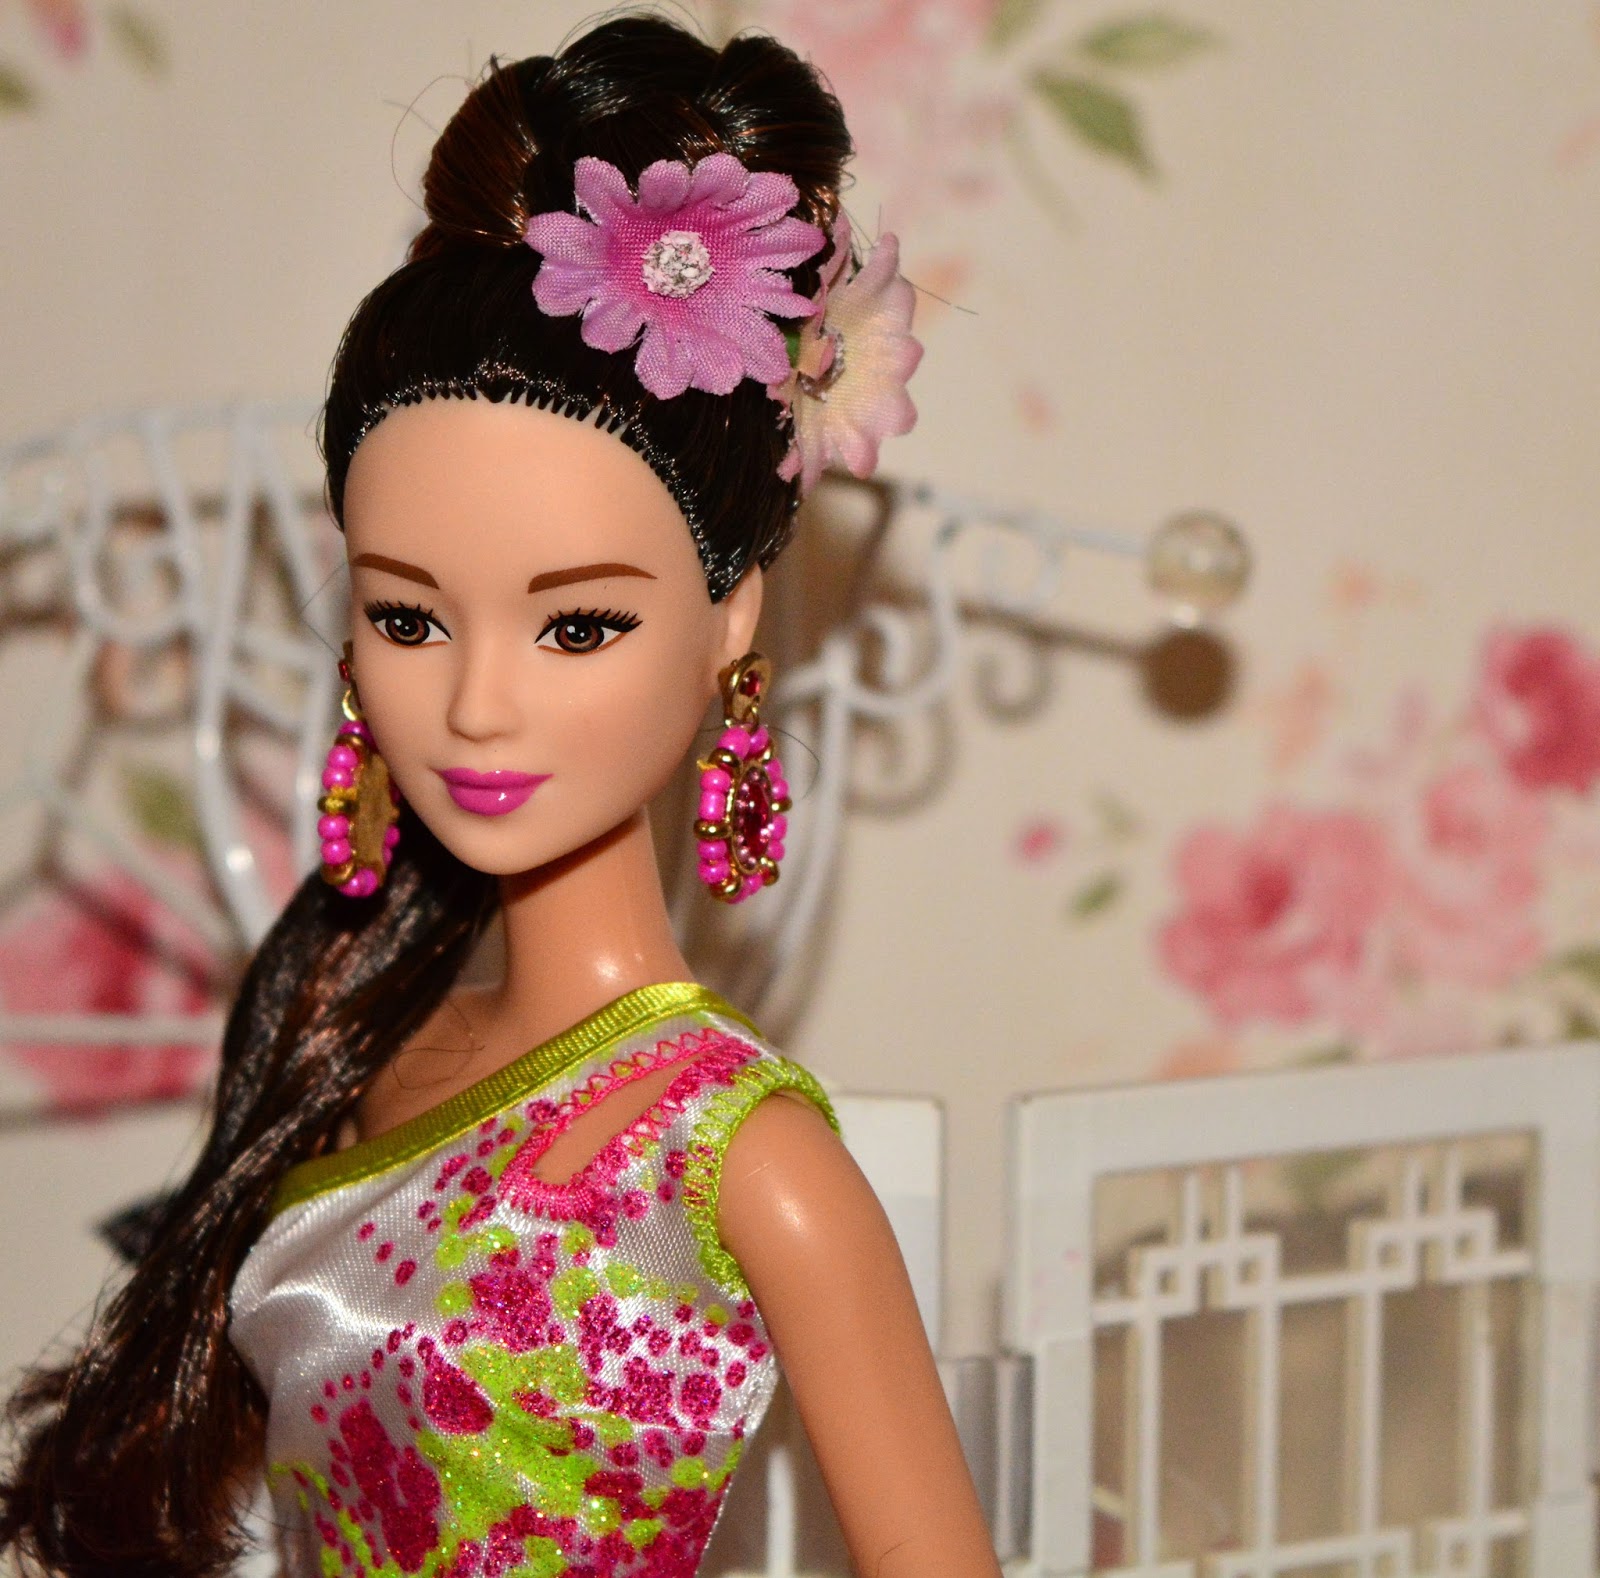 Asian barbie